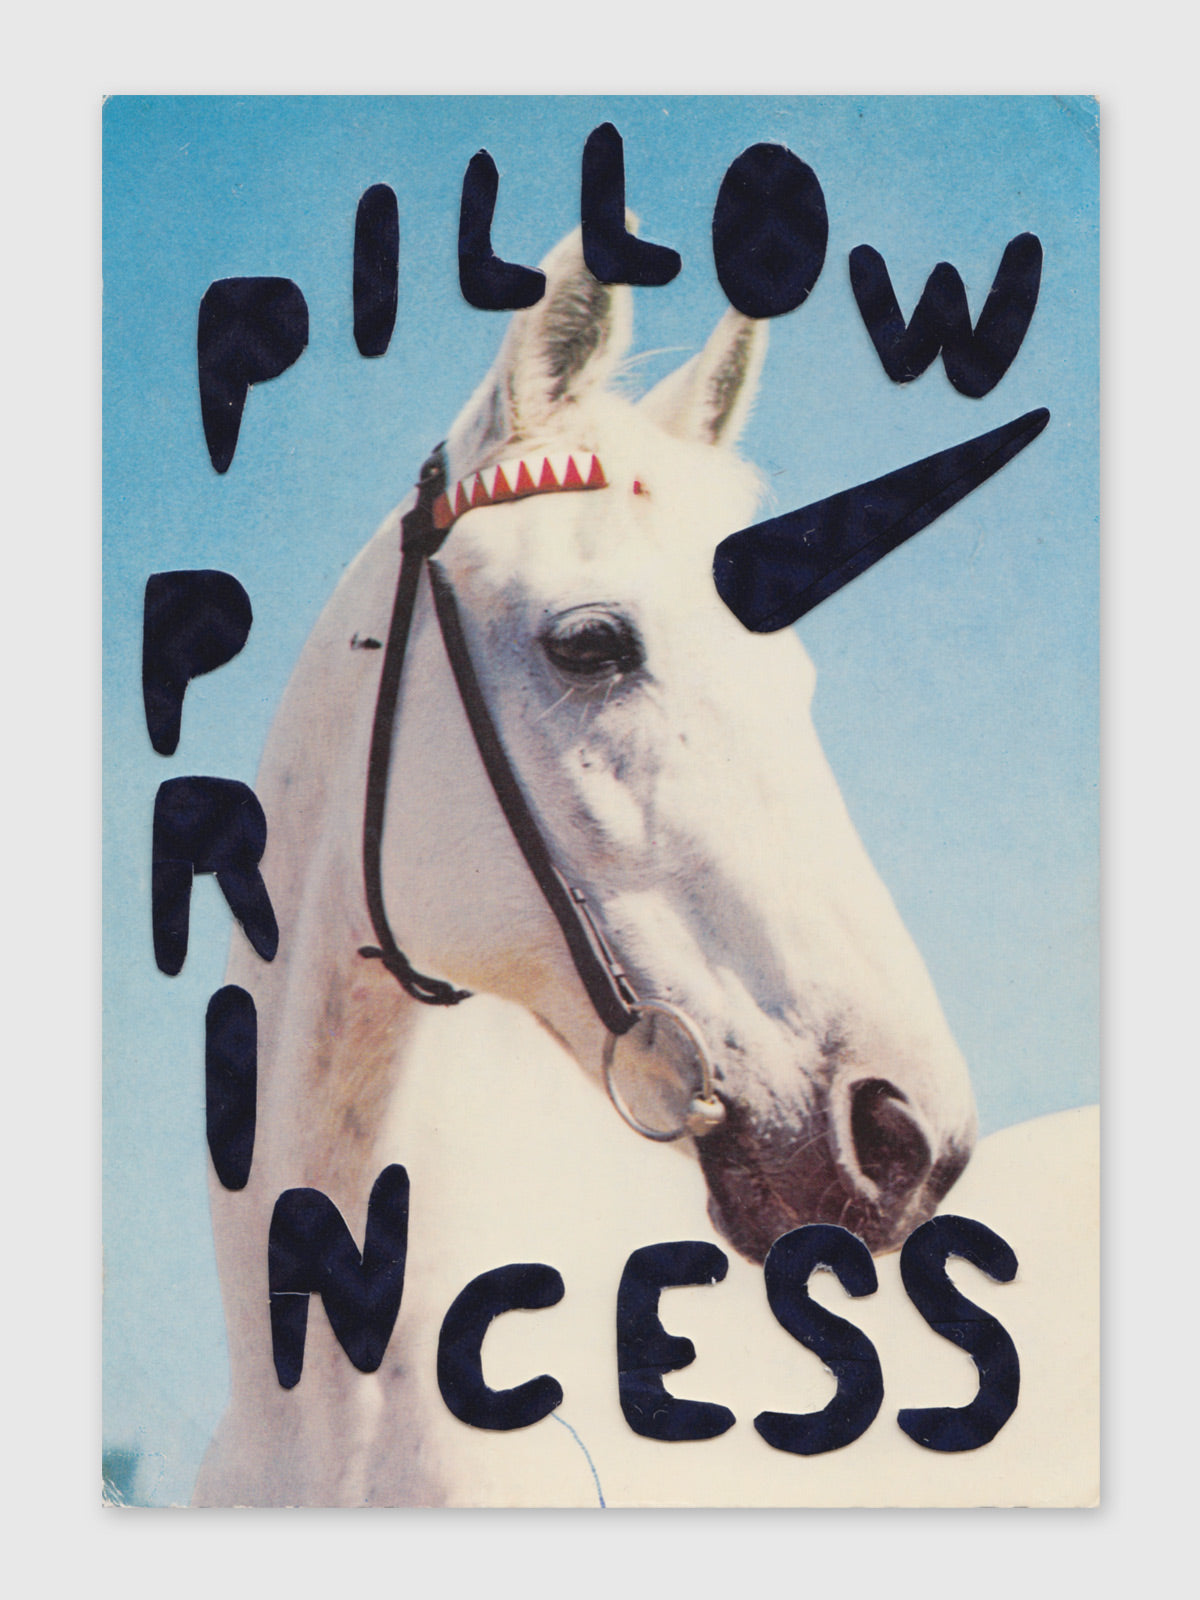 Collage – "Pillow Princess"